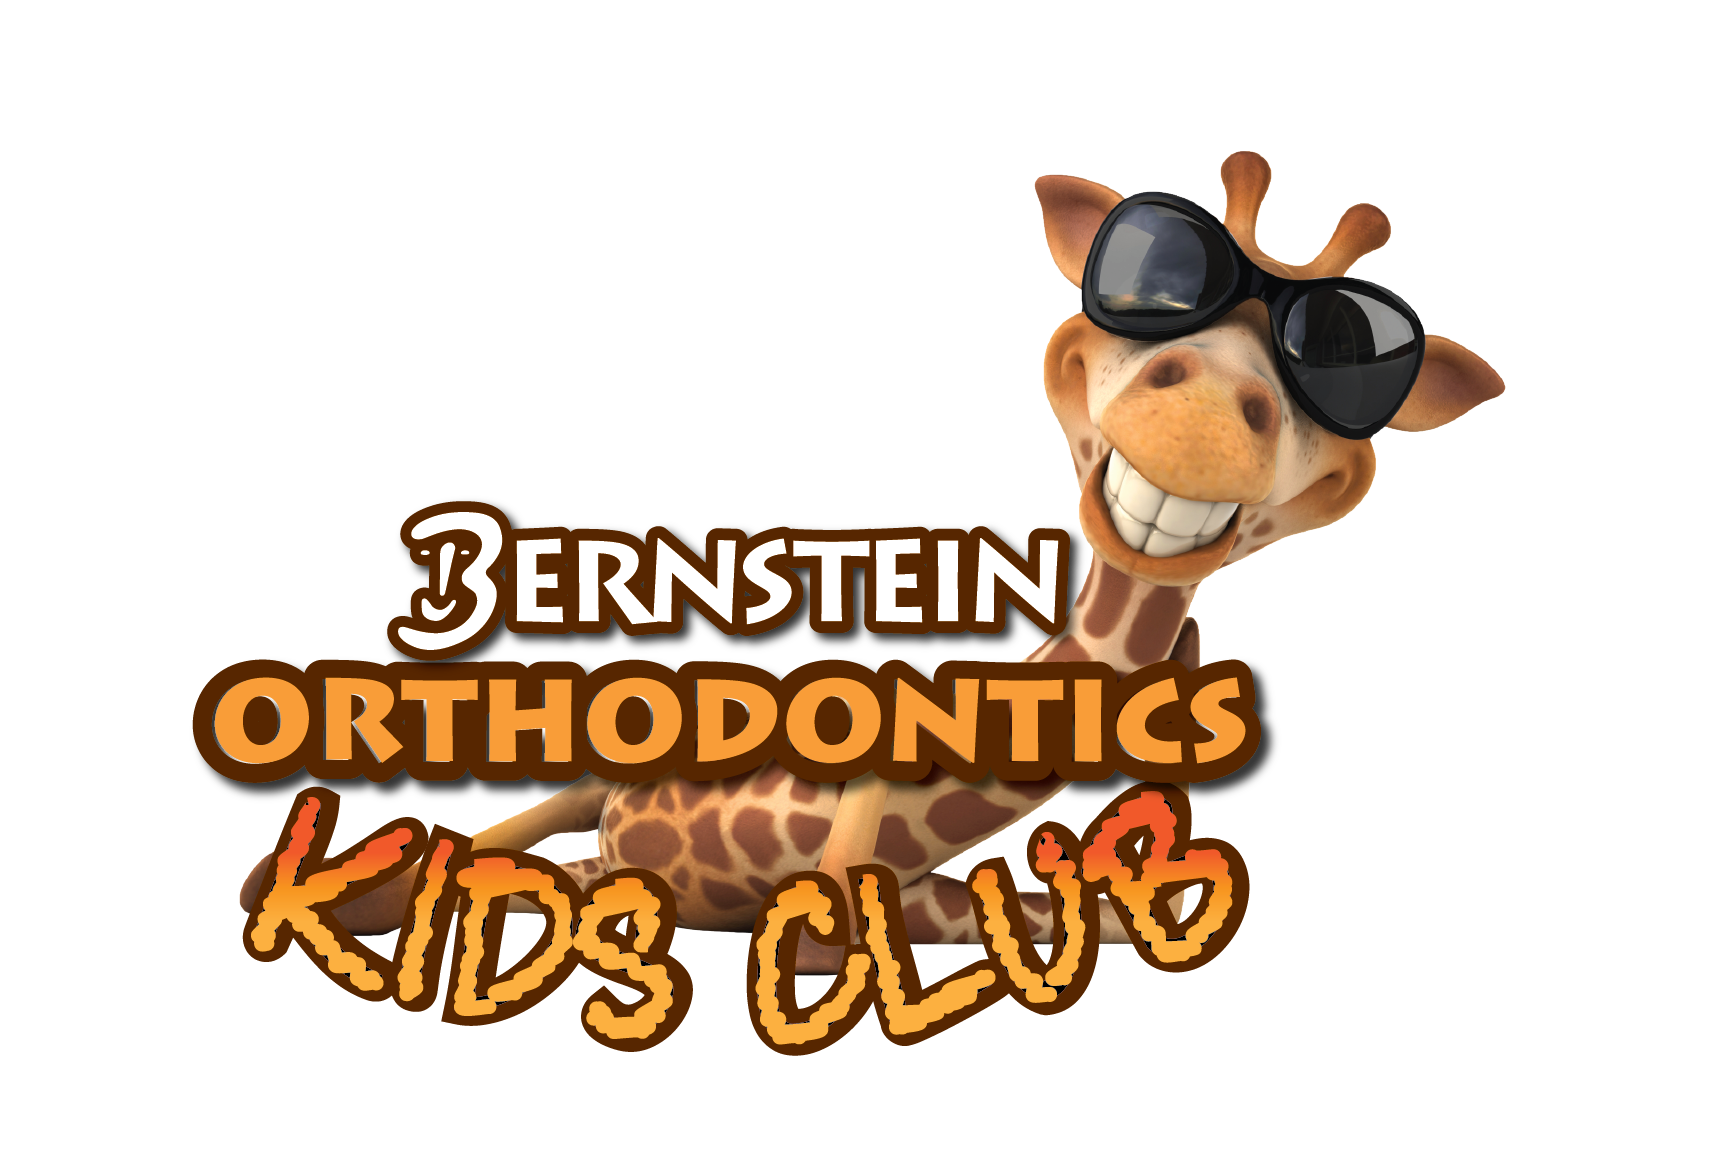 Bernstein Orthodontics Kids Club logo